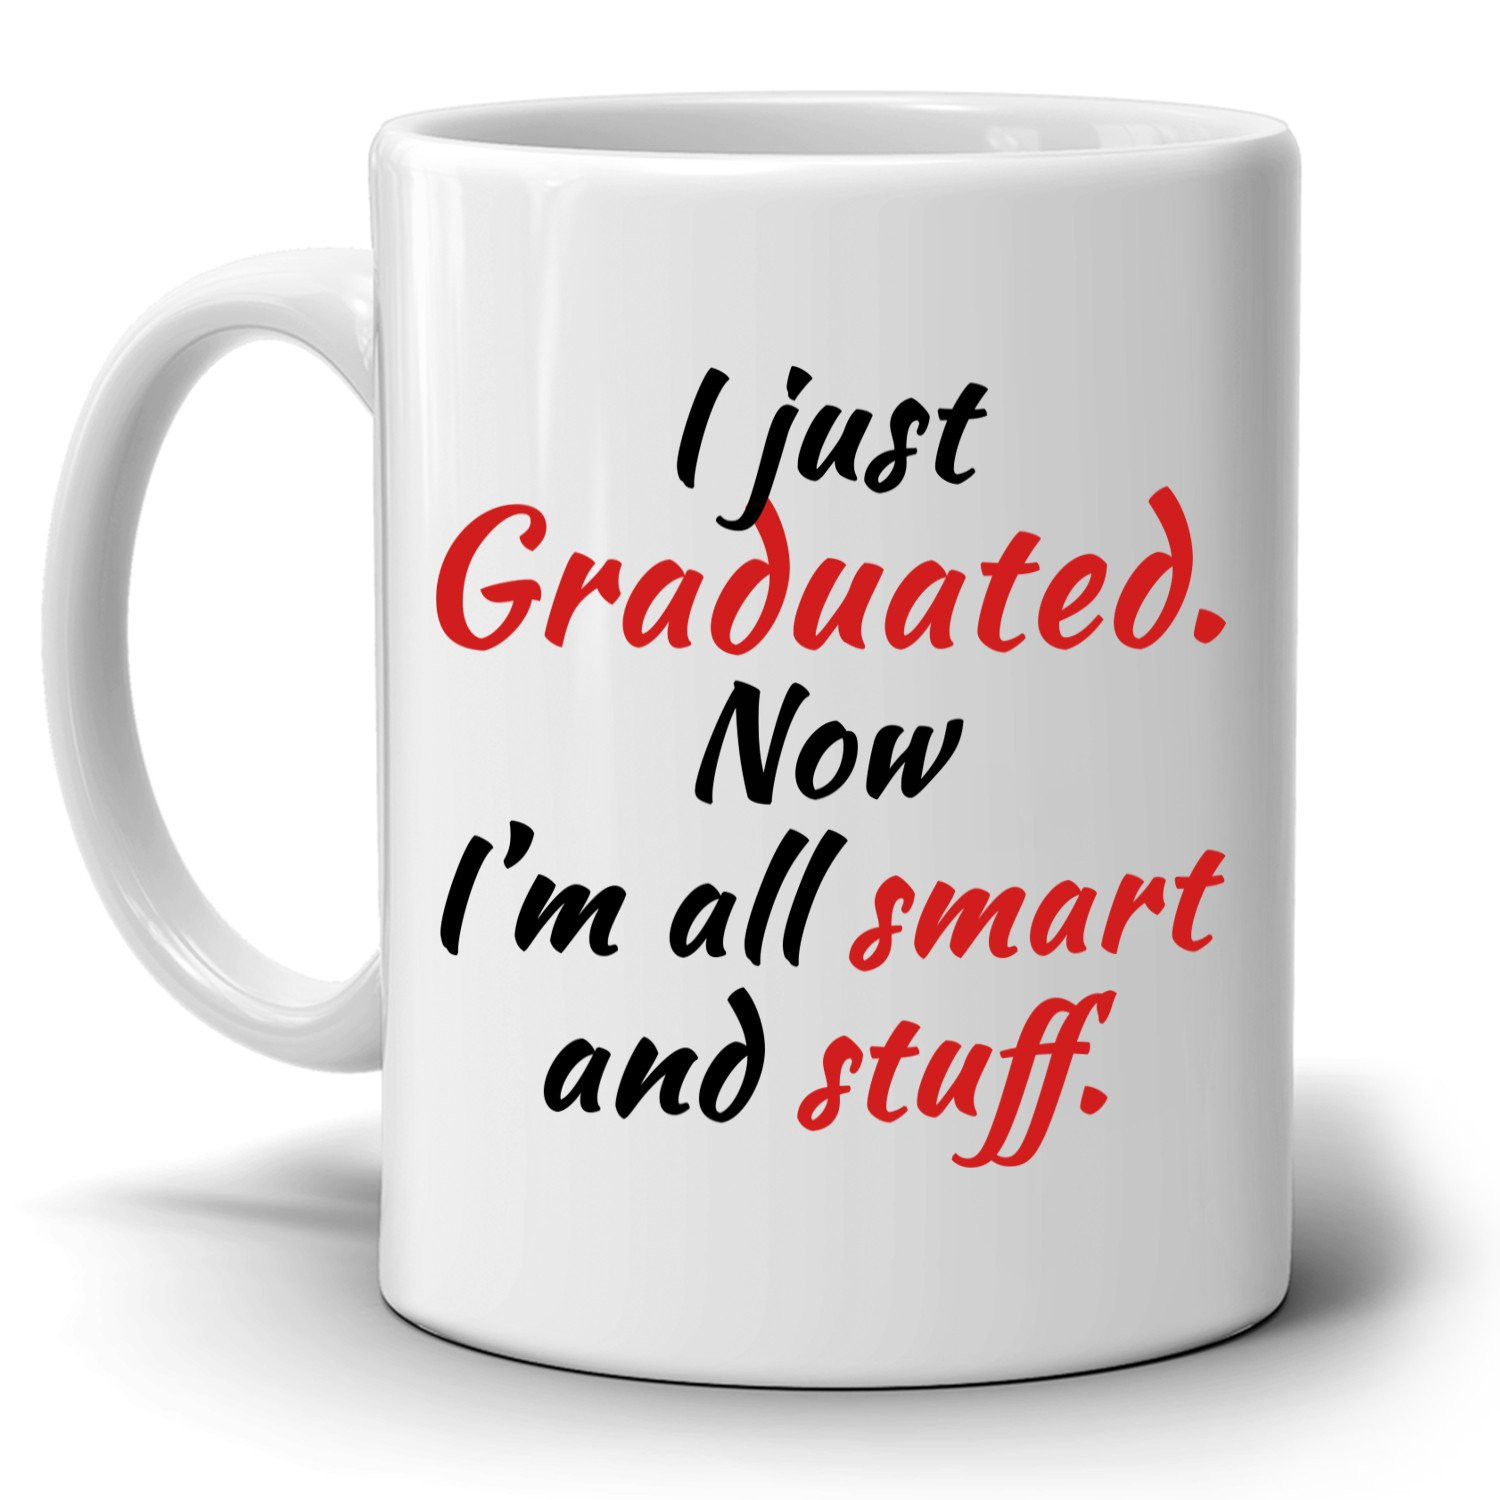 Graduation Gag Gift Ideas
 Personalized Graduation Cap Gifts Mug Unique Grad Gifts